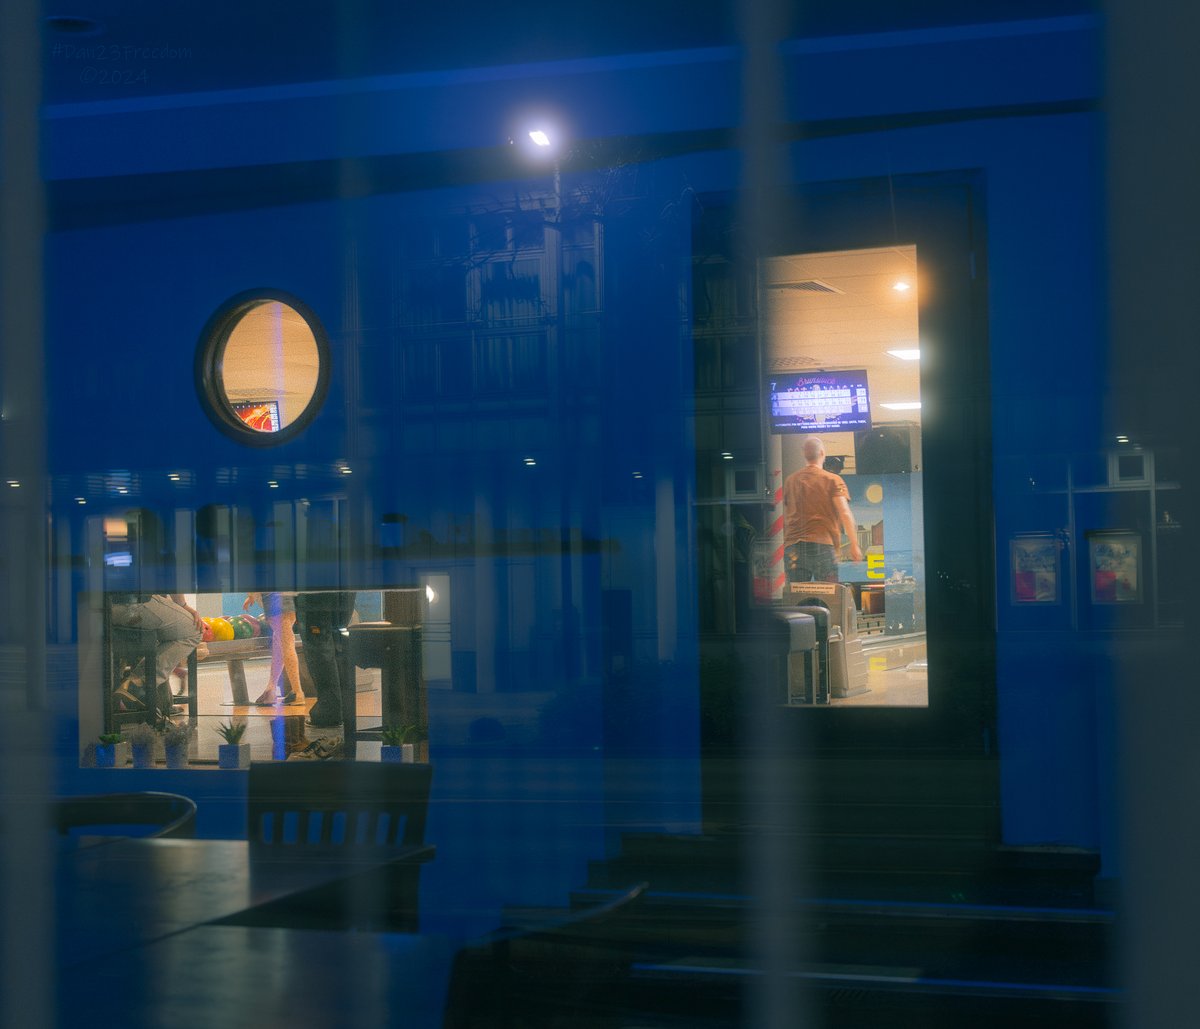 1/20 sec at f/3,5, ISO 800, 40 mm prime #dan23freedom
#germany #nordrheinwestfalen #nightphotography #night #nighttimephotography #nightshooters #urbanphotography #exlore #walk #streetphotography #streetlights #bowling #bowlingalley #windowview #reflections